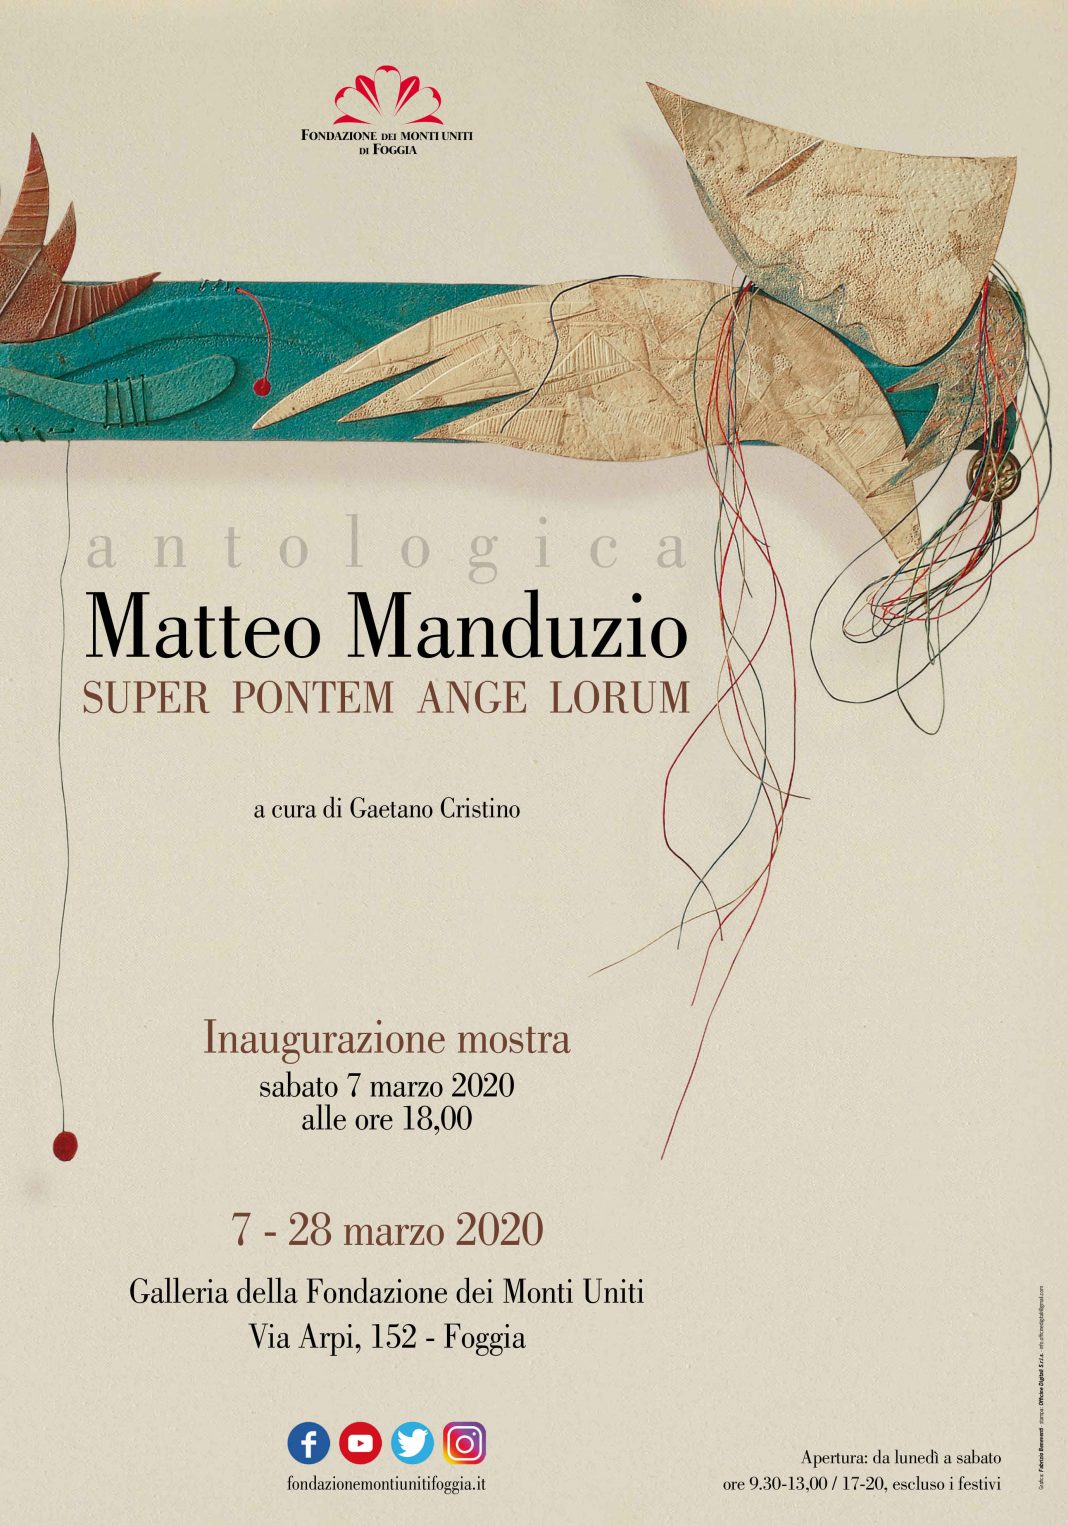 Matteo Manduzio – Super pontem ange lorumhttps://www.exibart.com/repository/media/formidable/11/Manifesto-Manduzio-1068x1526.jpg